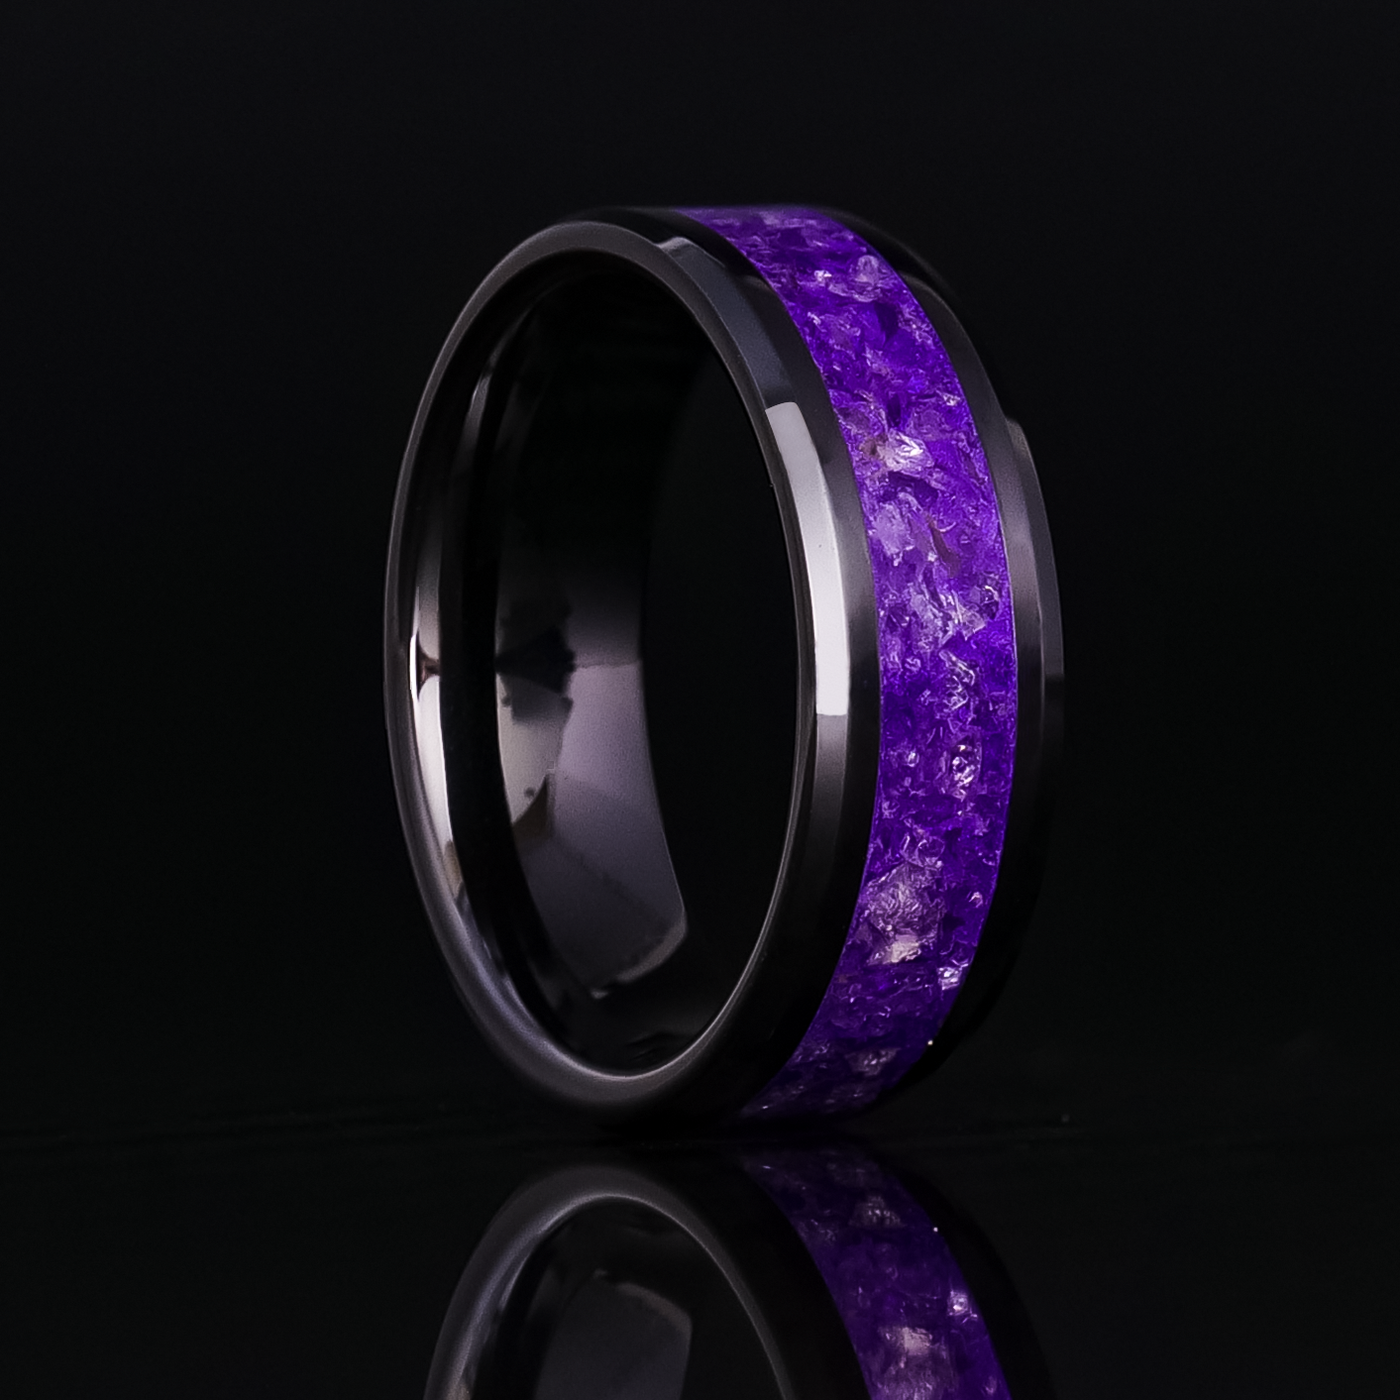 Amethyst Glowstone Ring on Black Ceramic - Patrick Adair Designs